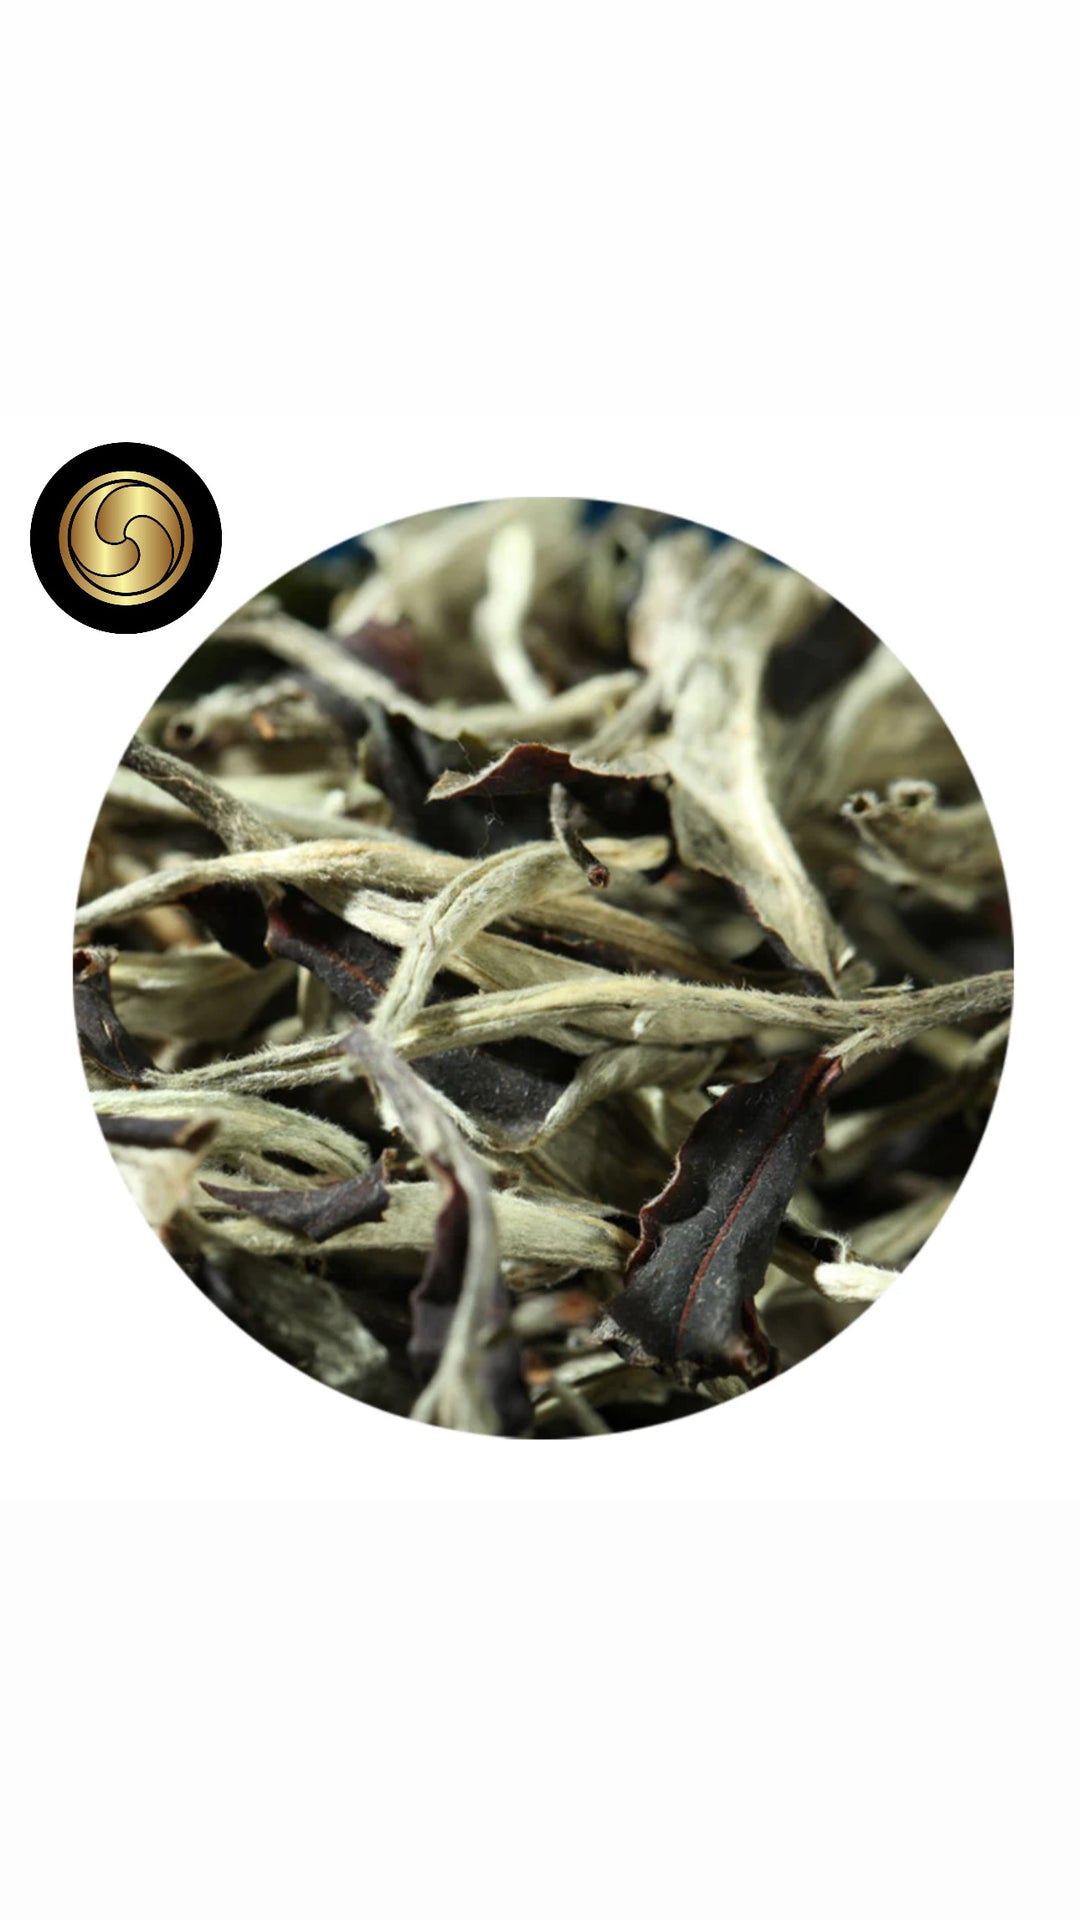 6. ☵ 6pm in the 6ix • Moonlight Beauty Tea • White Puer Tea • EU Organic Tea